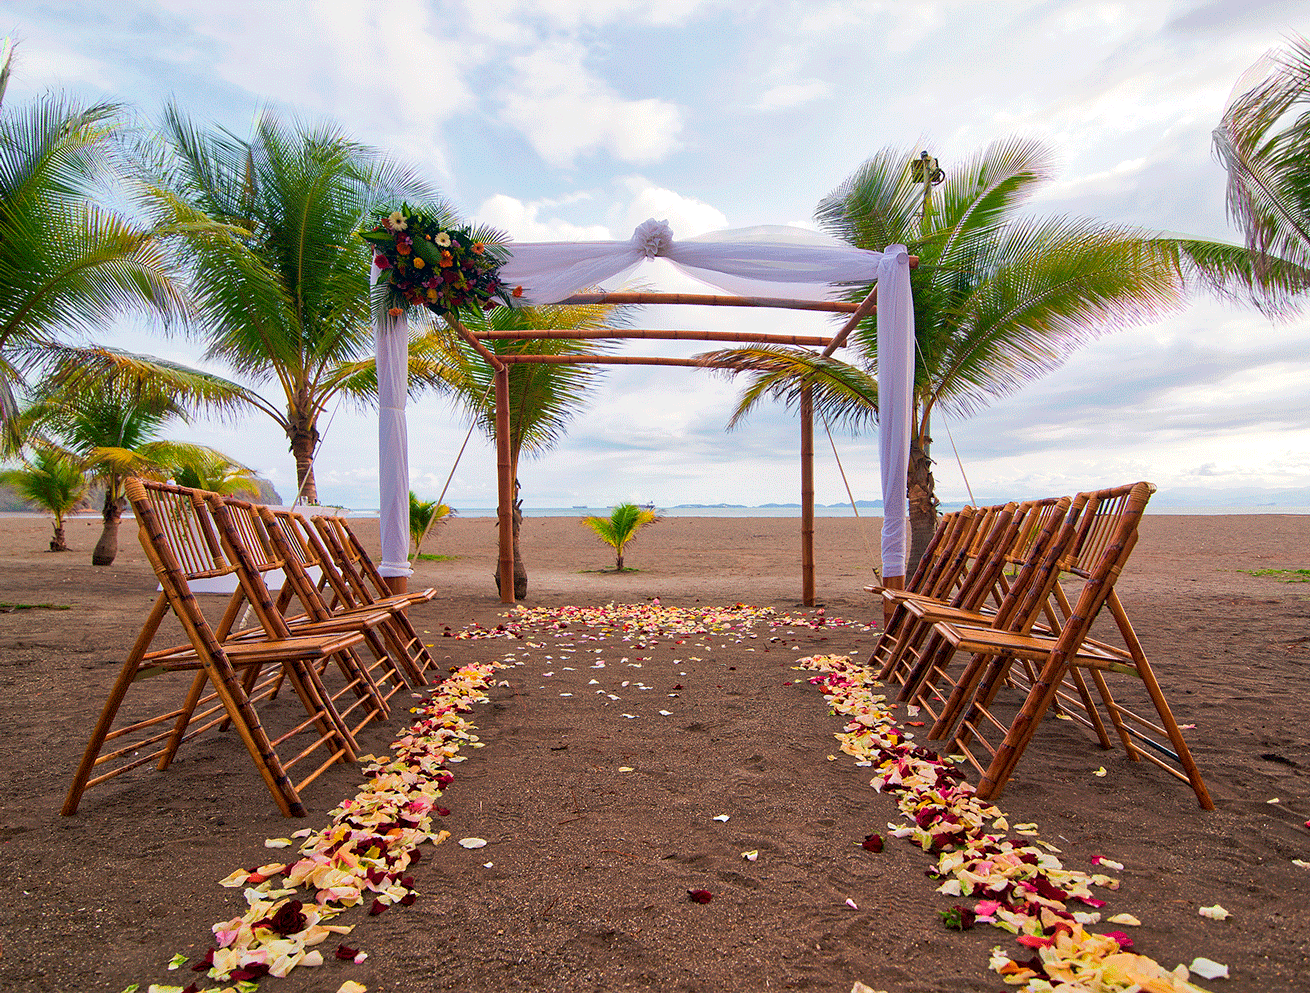 Book your wedding day in Fiesta Resort